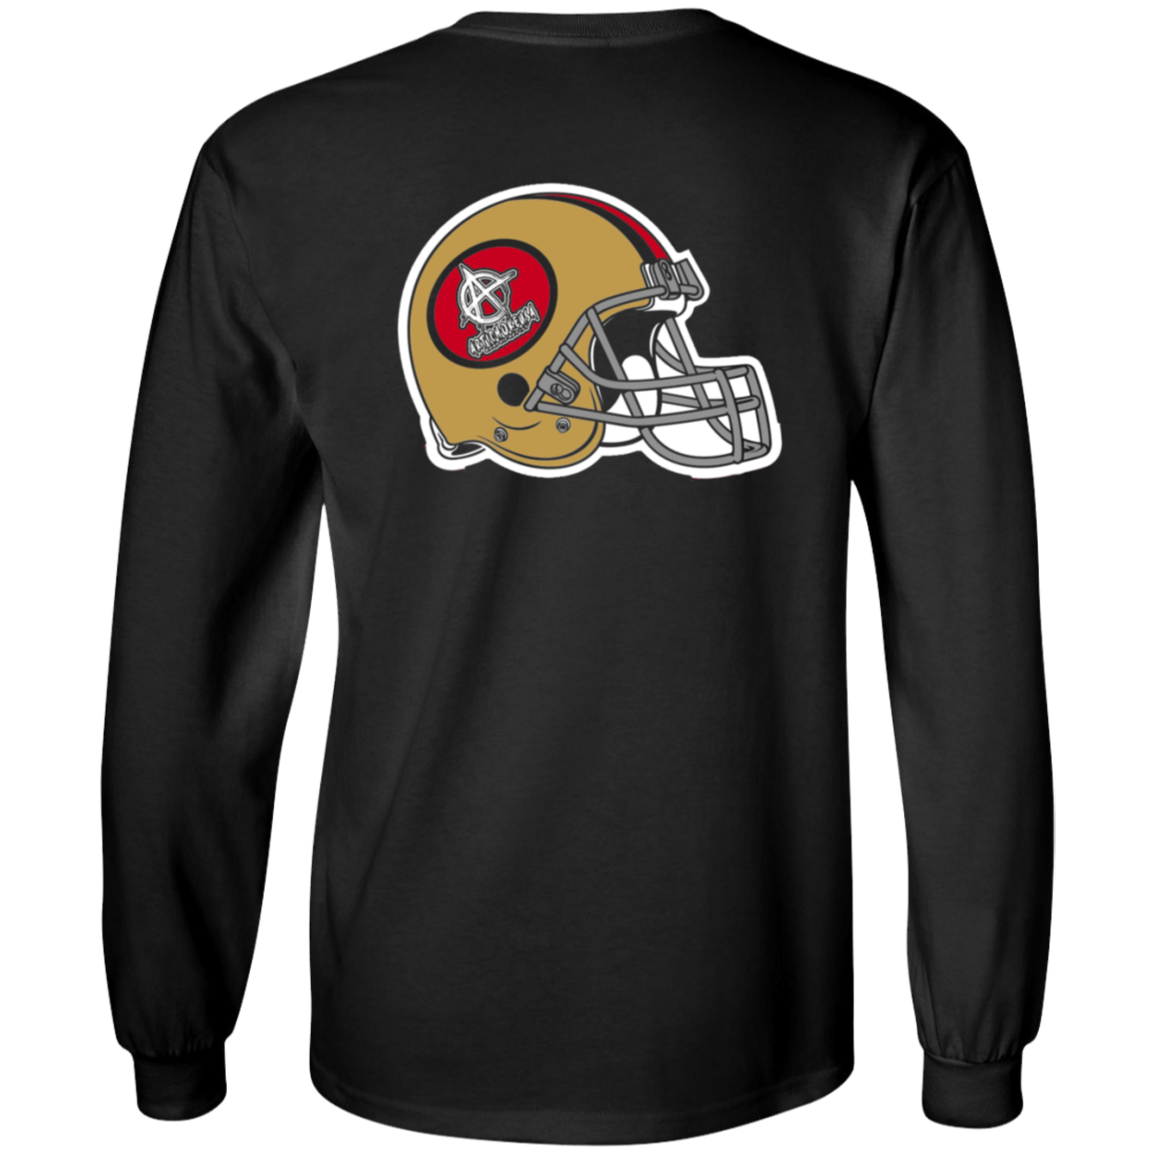 ArtichokeUSA Custom Design #50. 9ers Love. SF 49ers Fan Art. Let's Make Your Own Custom Team Shirt. 100% Cotton Long Sleeve T-Shirt